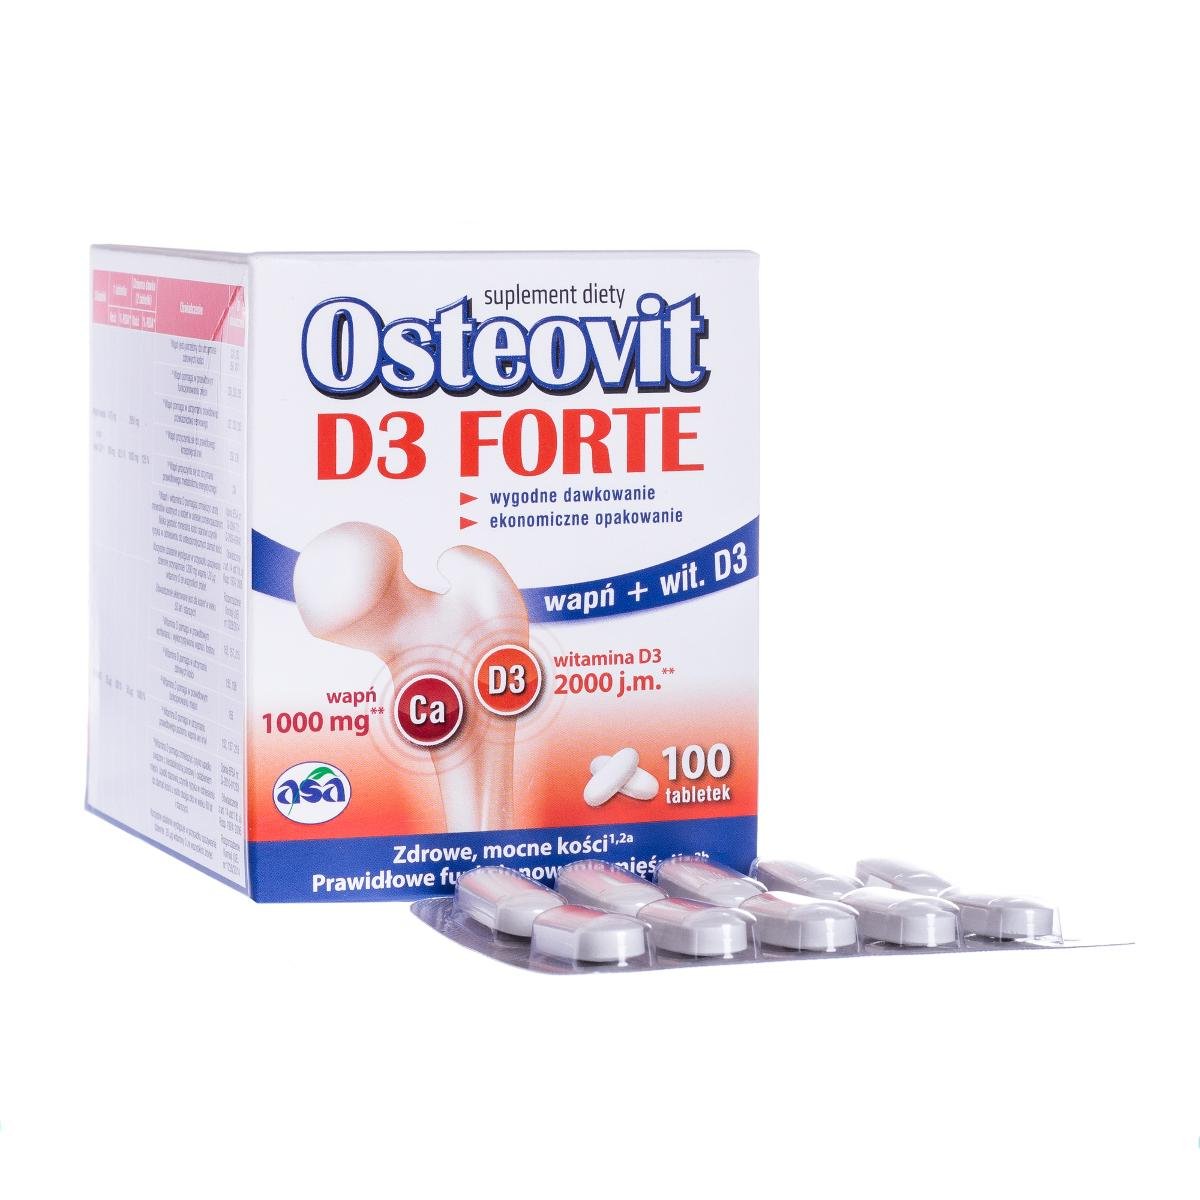 Osteovit D3 Forte, suplement diety, 100 tabletek  3138821